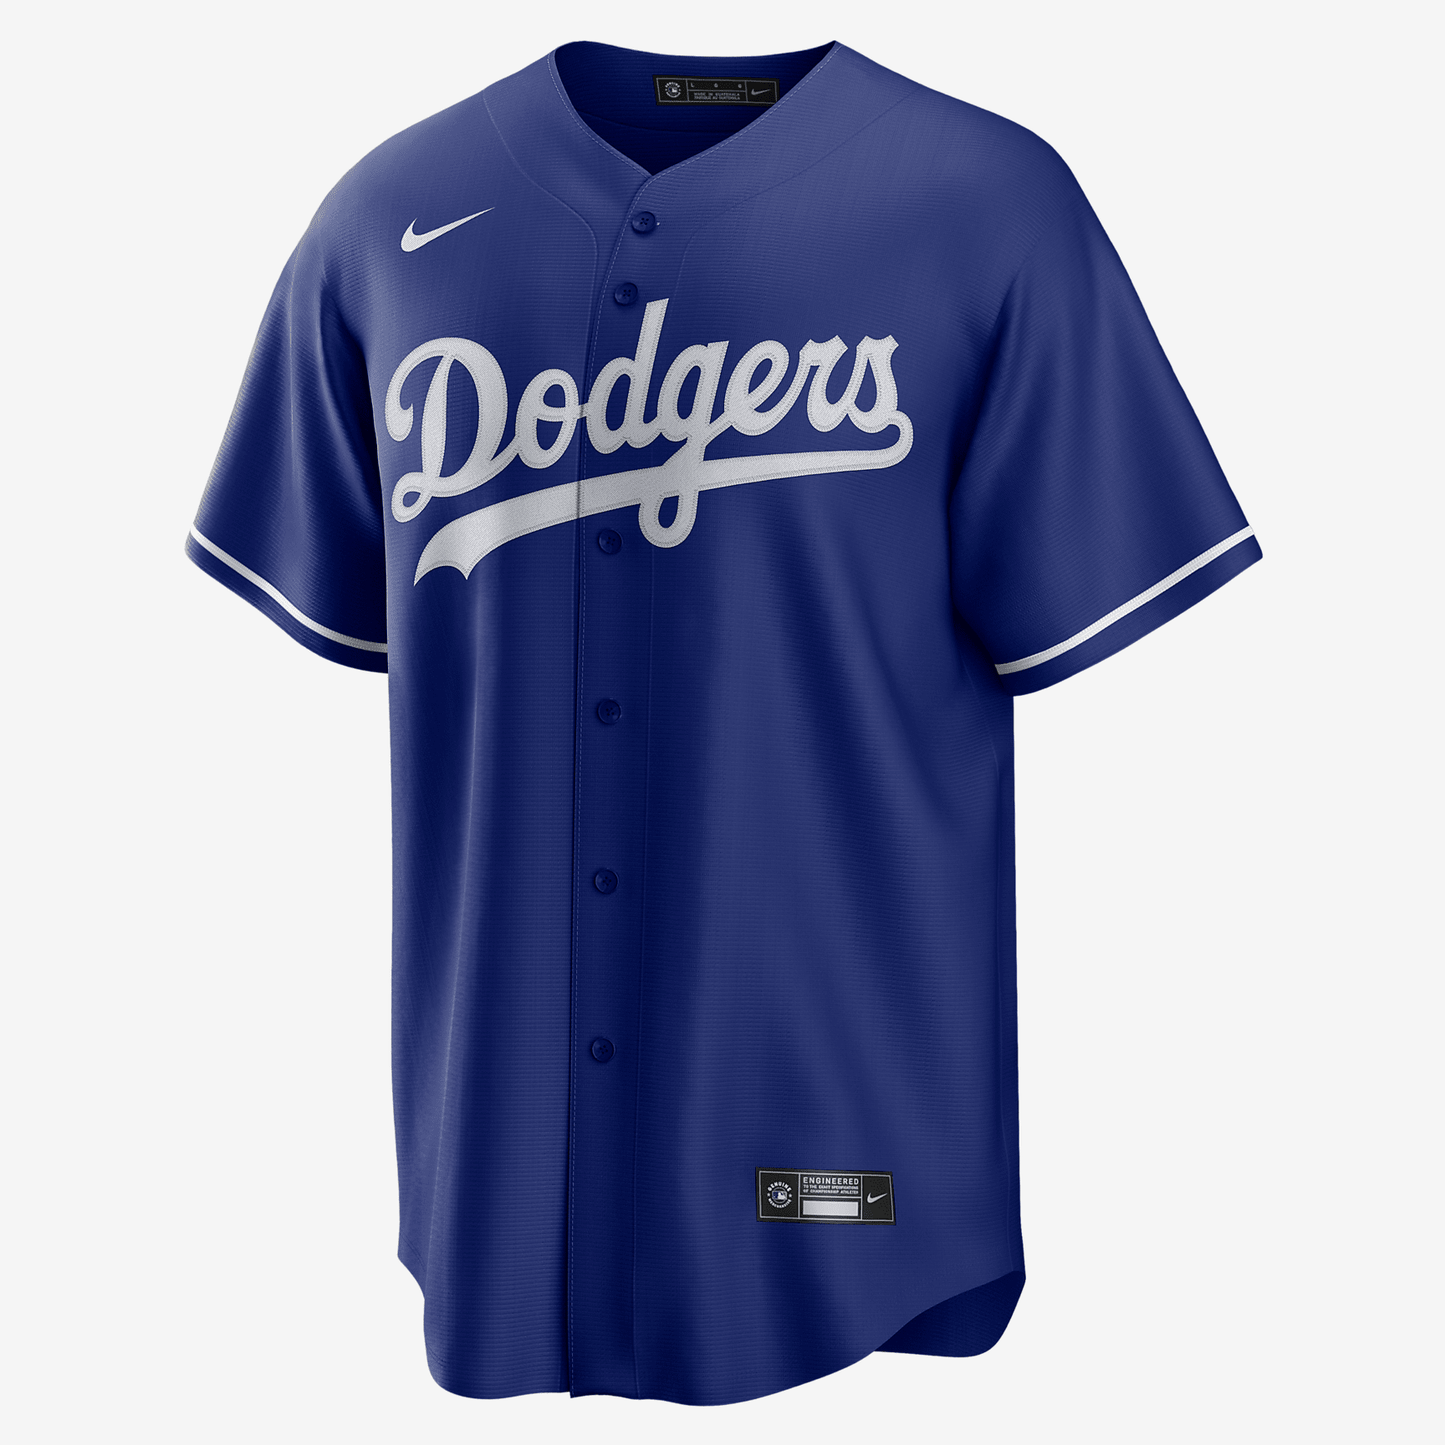 MLB Los Angeles Dodgers (Mookie Betts) Men's Replica Baseball Jersey - Deep Royal/White